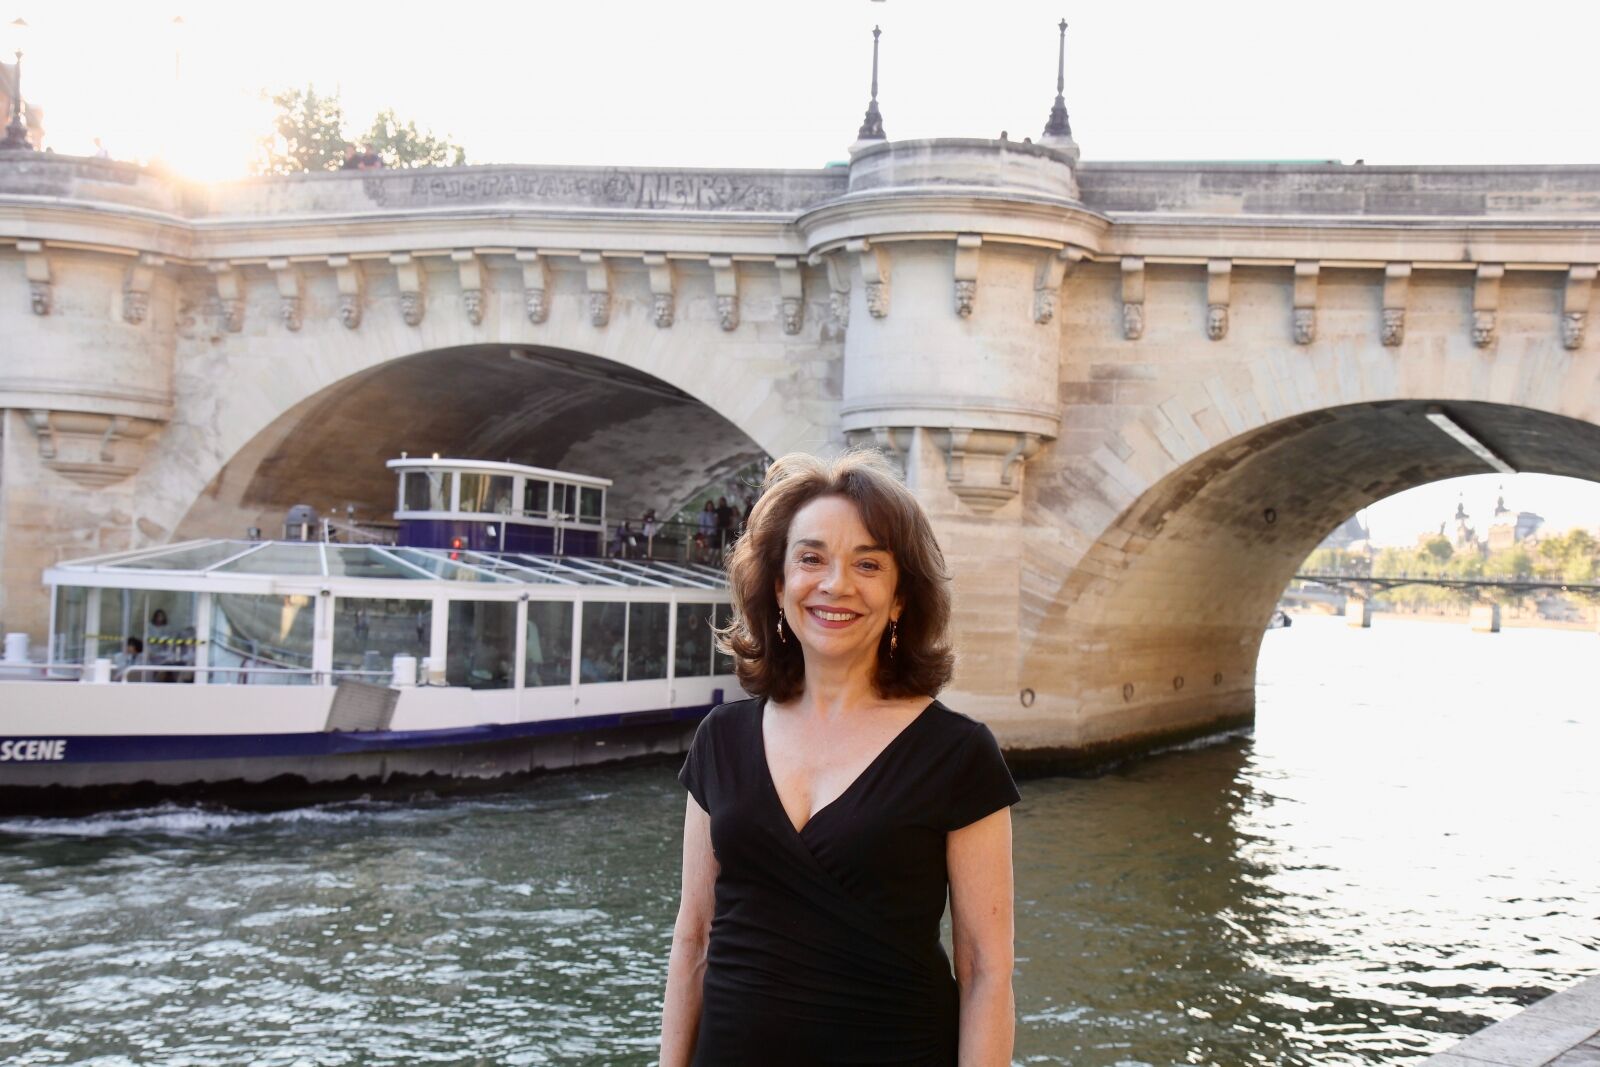 The Seine by Elaine Sciolino